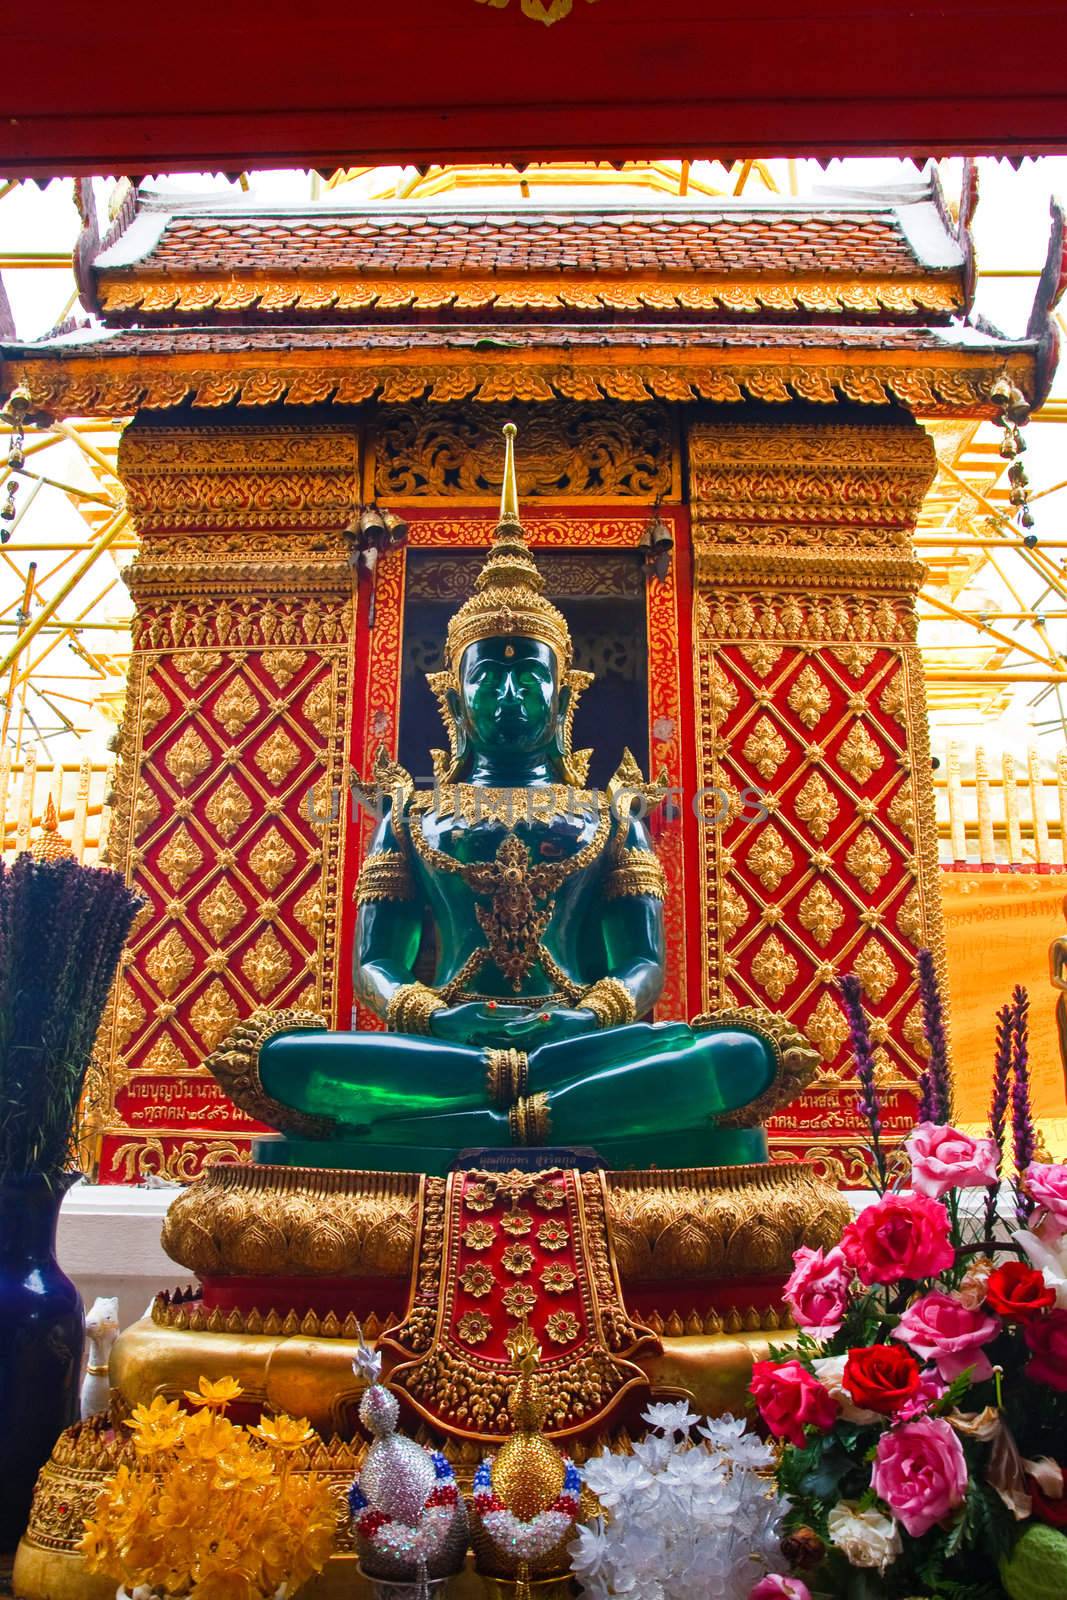 Emerald Buddha image by criminalatt